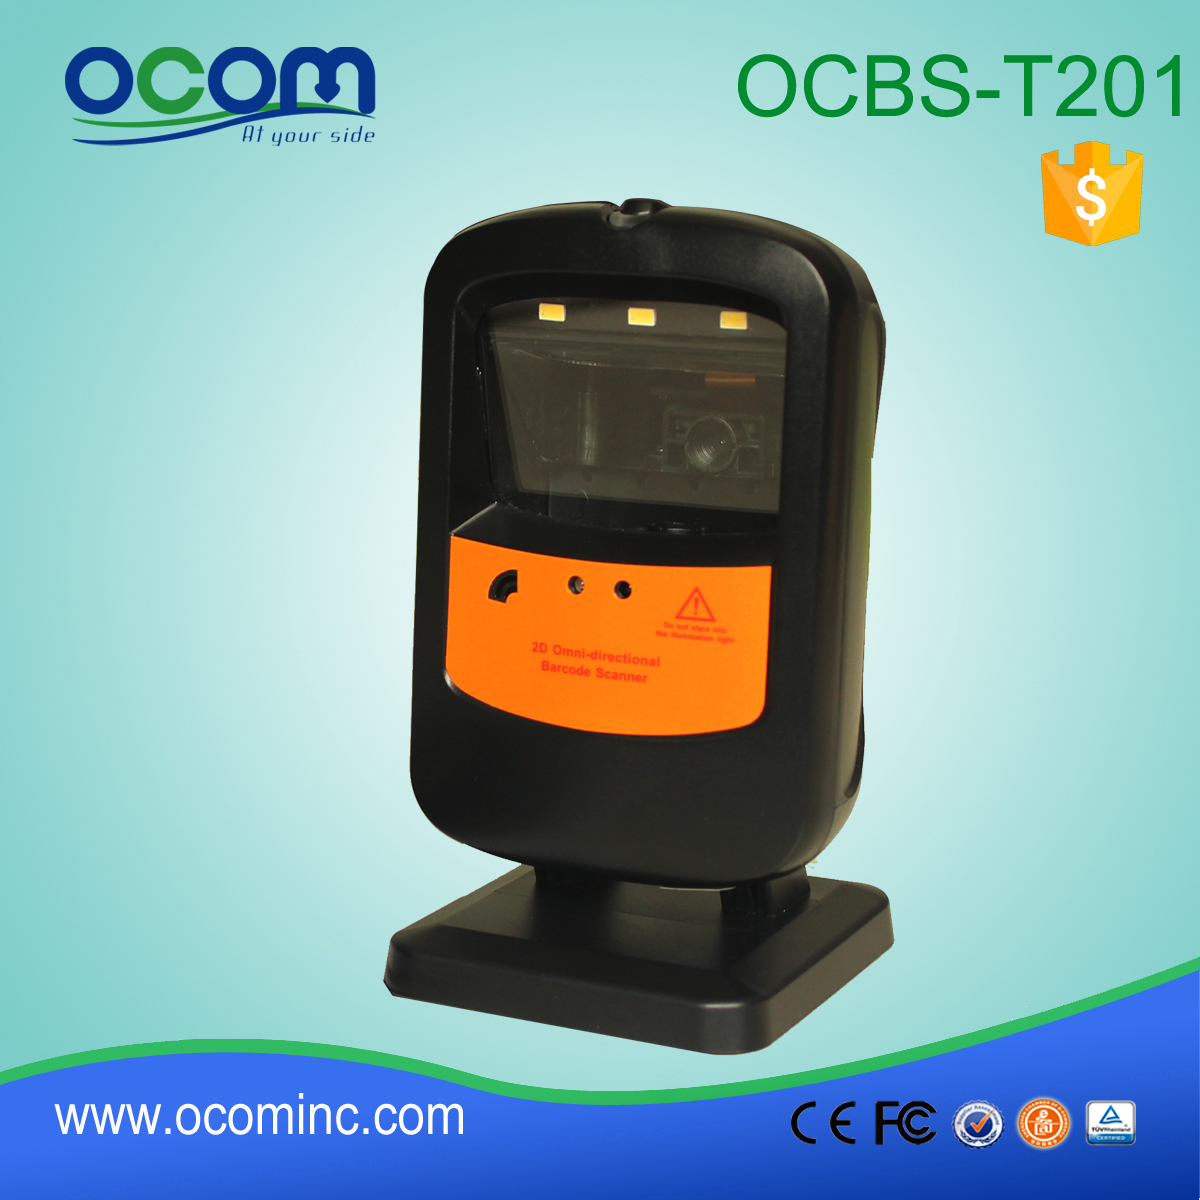 OCBS-T201: Flachbett-Barcode-Scanner Preis, china Barcode-Scanner